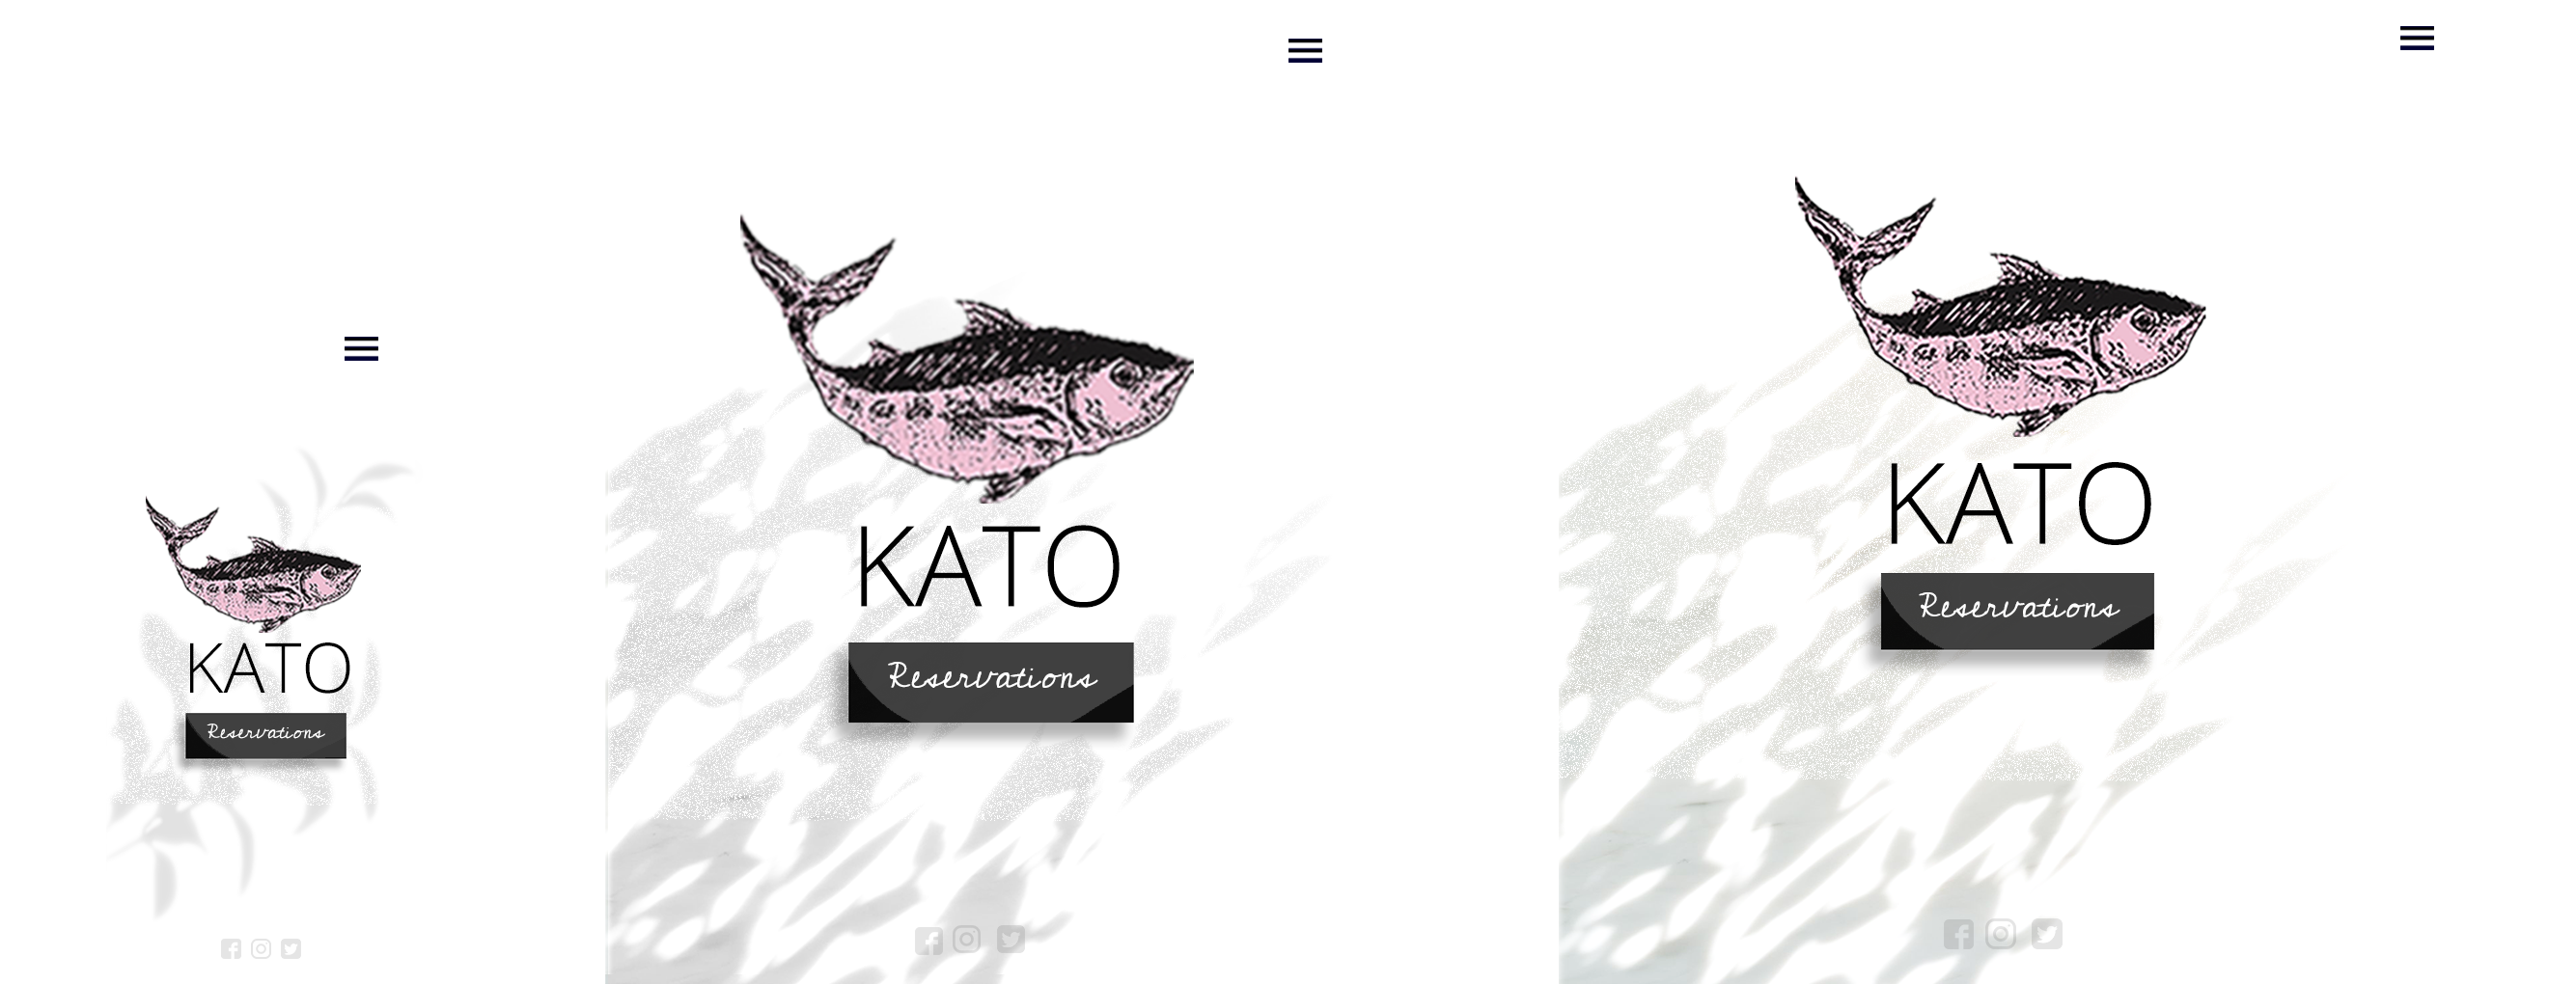 Kato-Style_splashpage